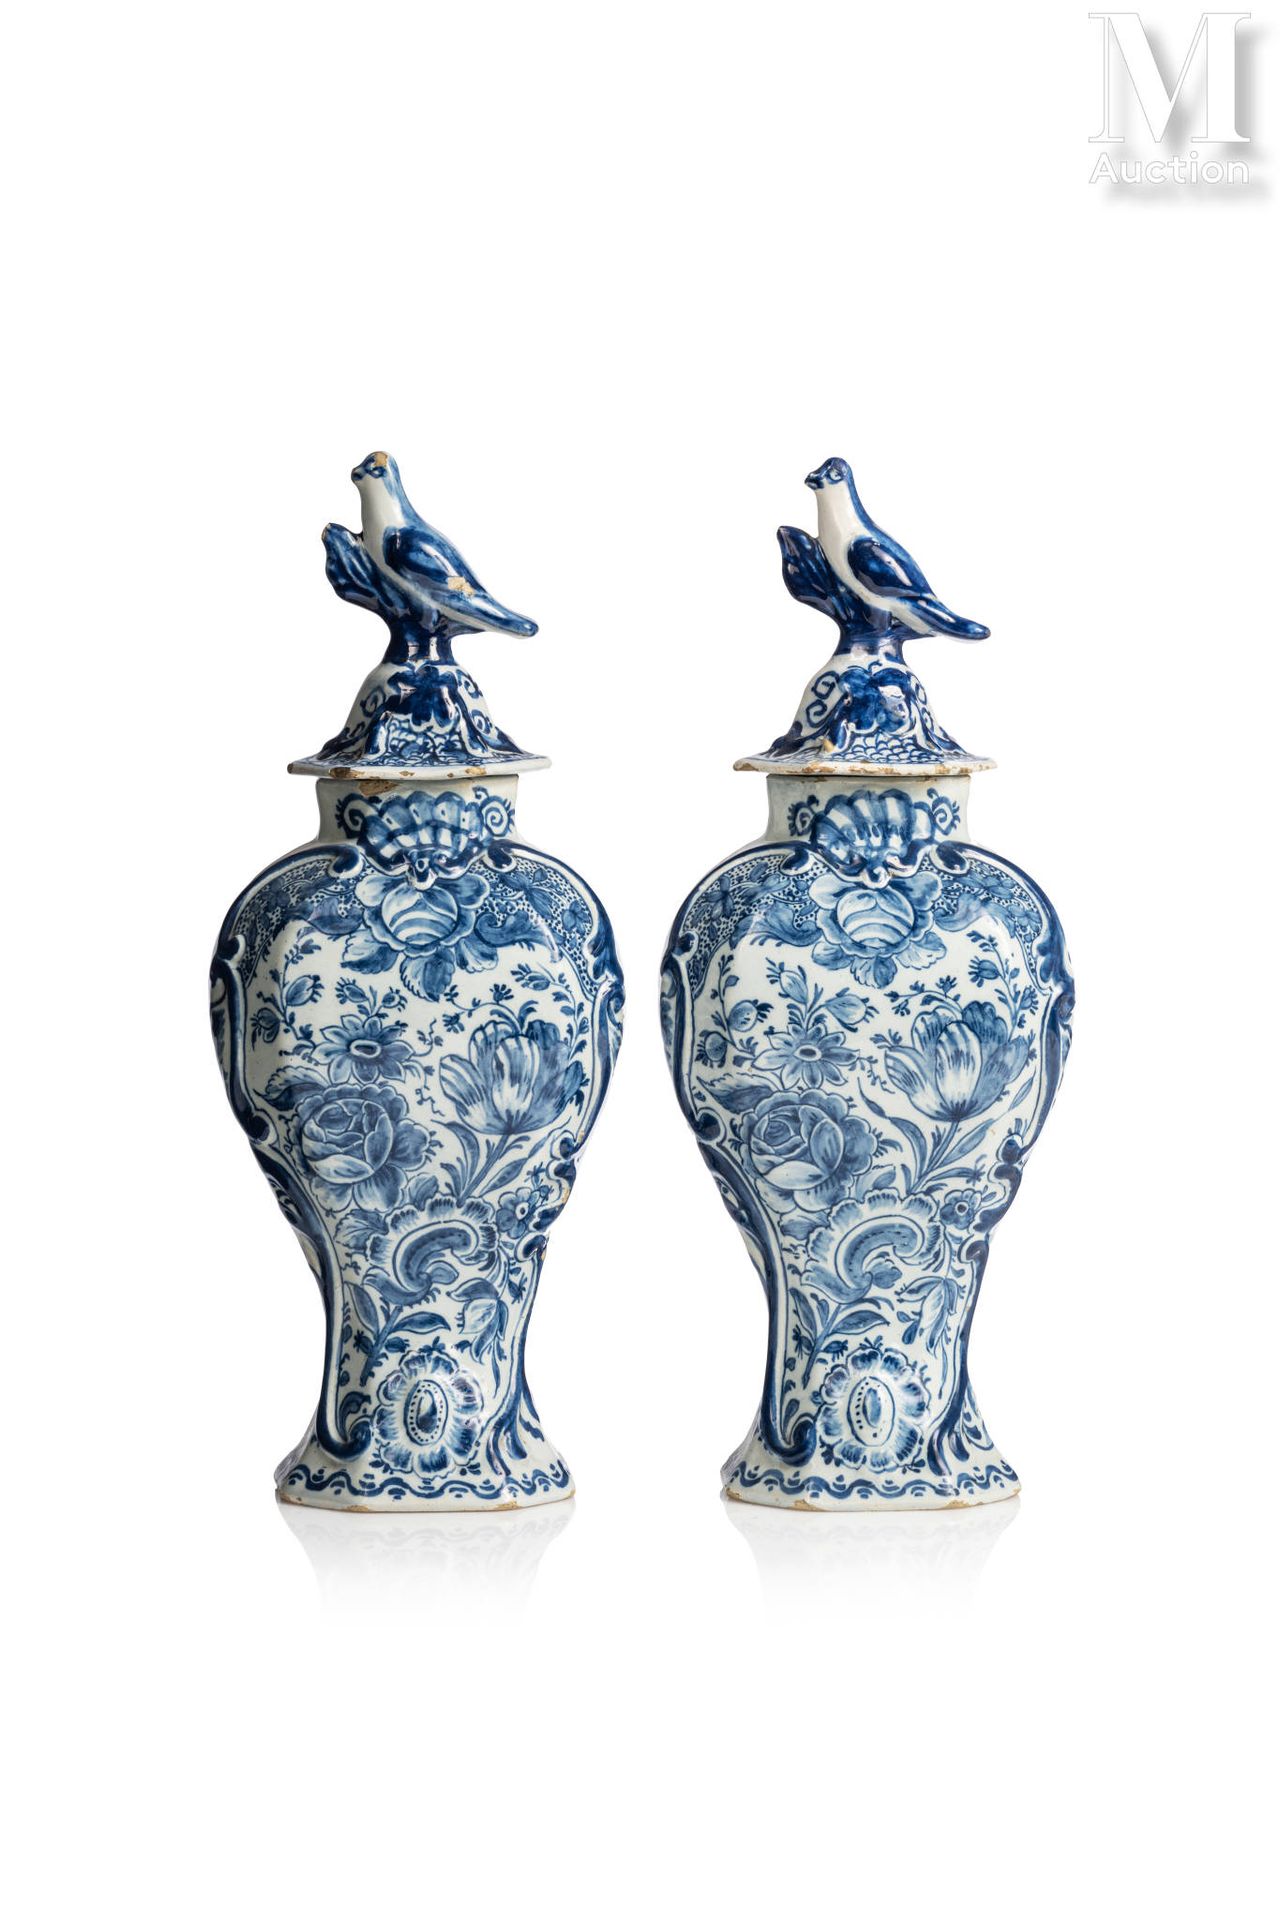 DELFT 一对有盖的陶器花瓶，阳台形状，有蓝色的单色花卉装饰。盖子上有鸟冠。
18世纪晚期
高度：34厘米
缺陷和颠簸
底座下标有LPK，代表De Lampe&hellip;